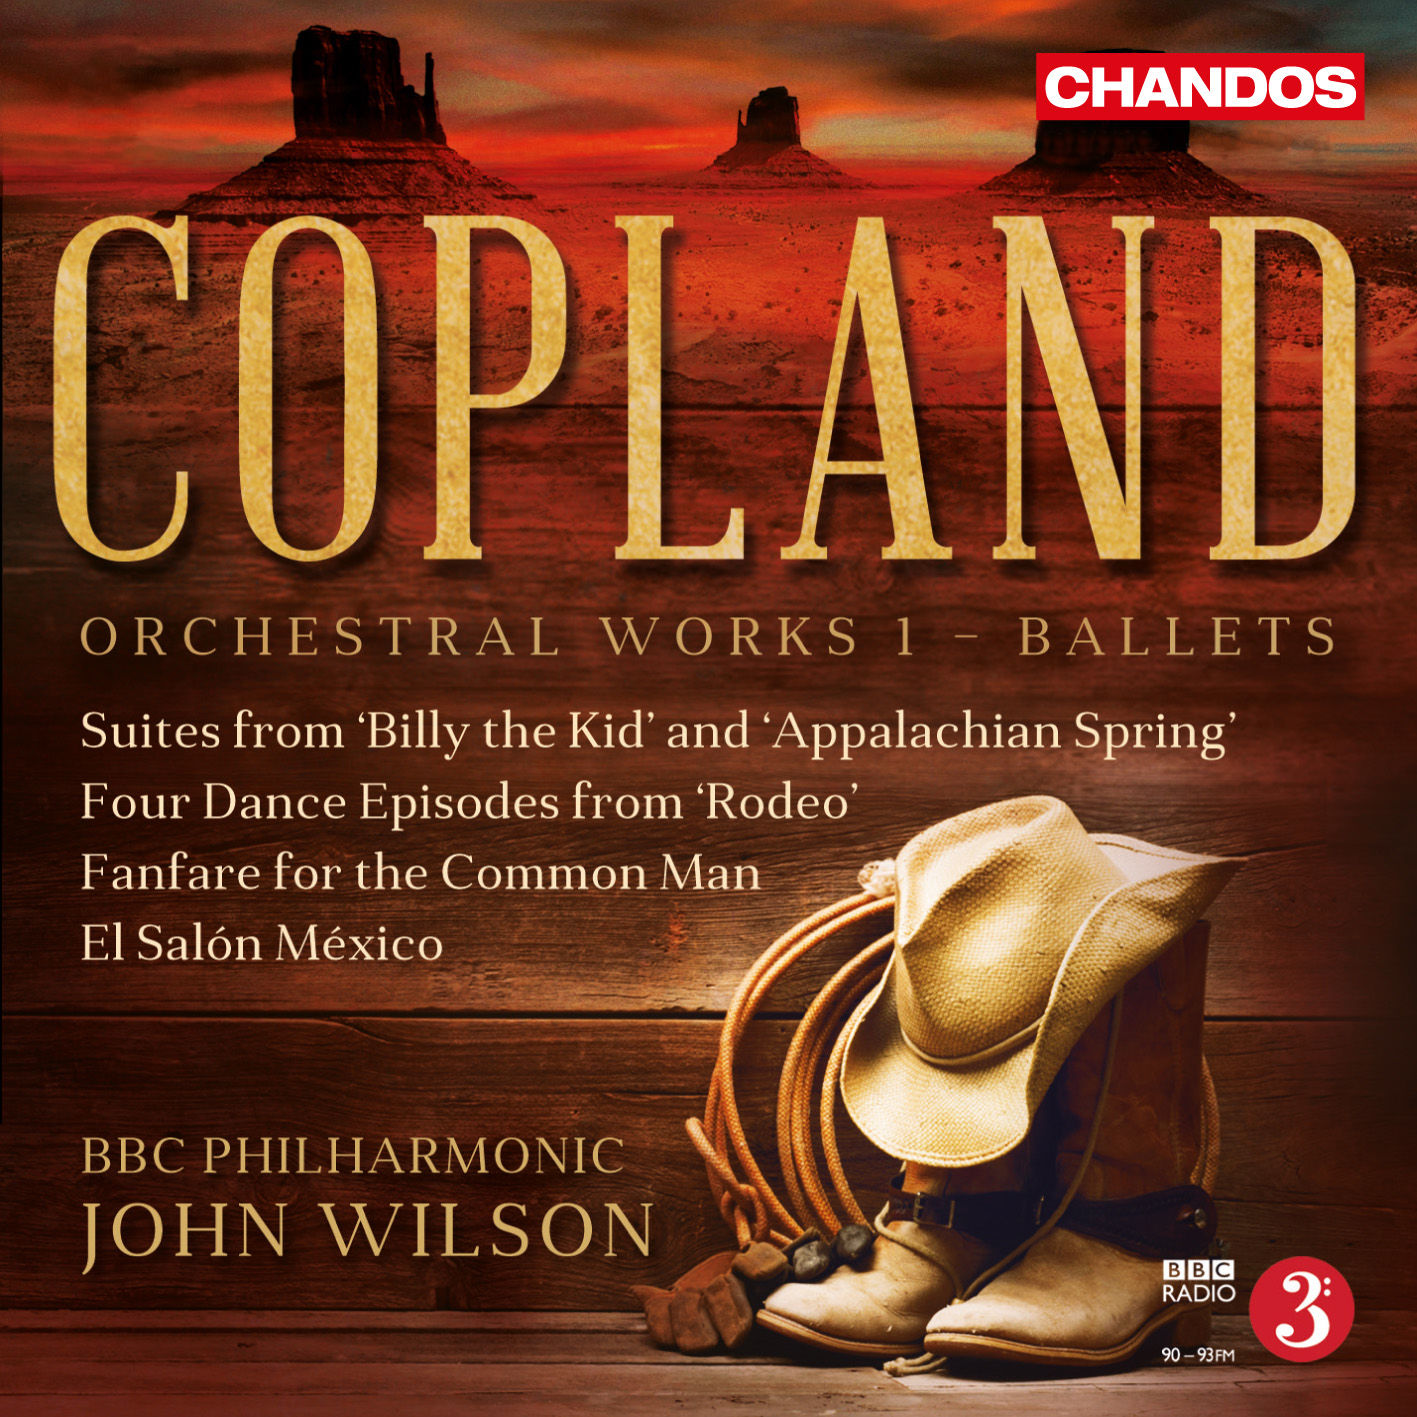 BBC Philharmonic Orchestra, John Wilson - Copland- Orchestral Works, Vol. 1 - Ballets (2016) [FLAC 24bit/96kHz]